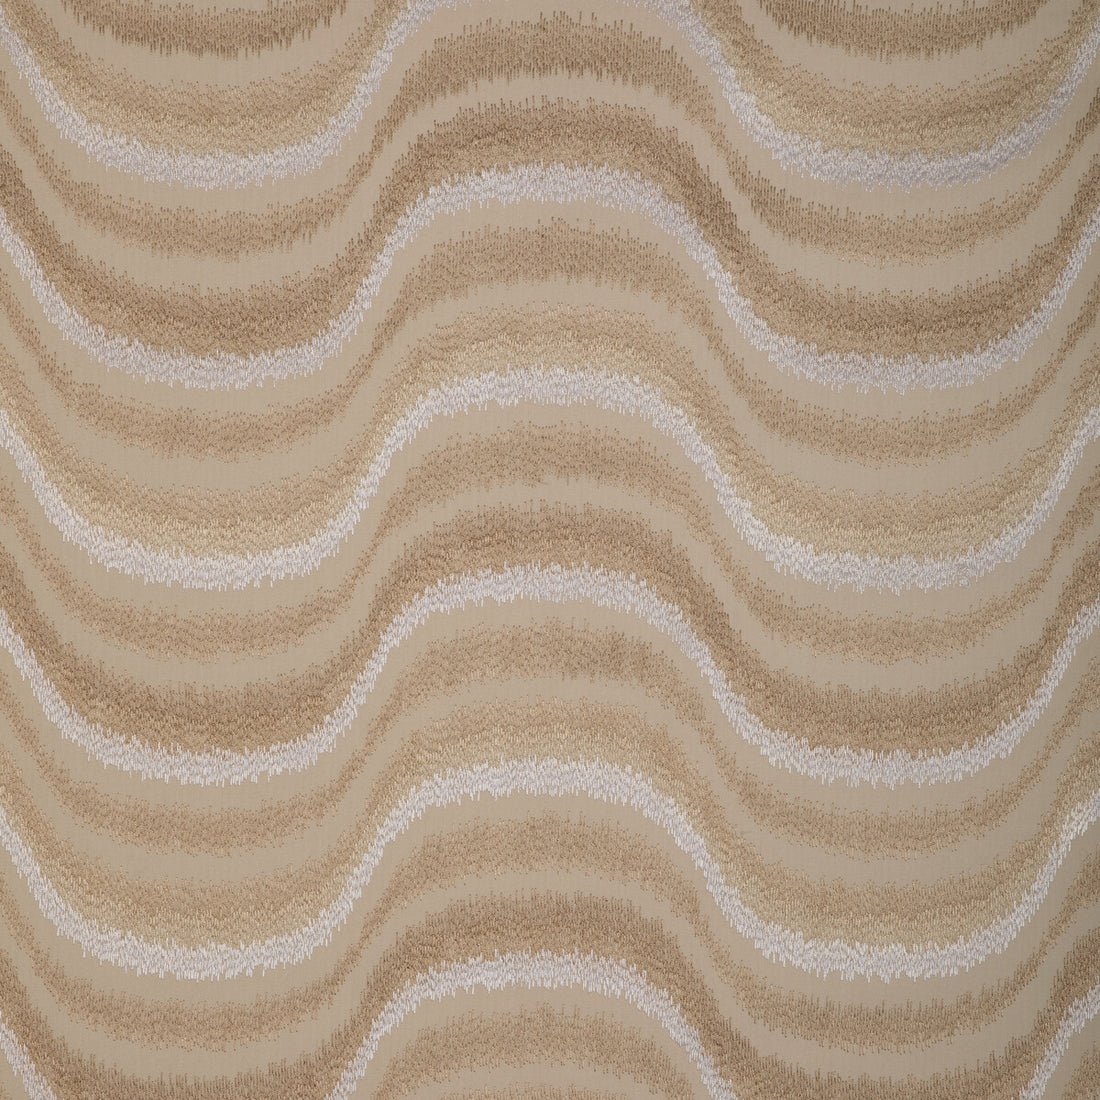 Du Son Emb fabric in beige color - pattern 8023141.1614.0 - by Brunschwig &amp; Fils in the Celeste collection